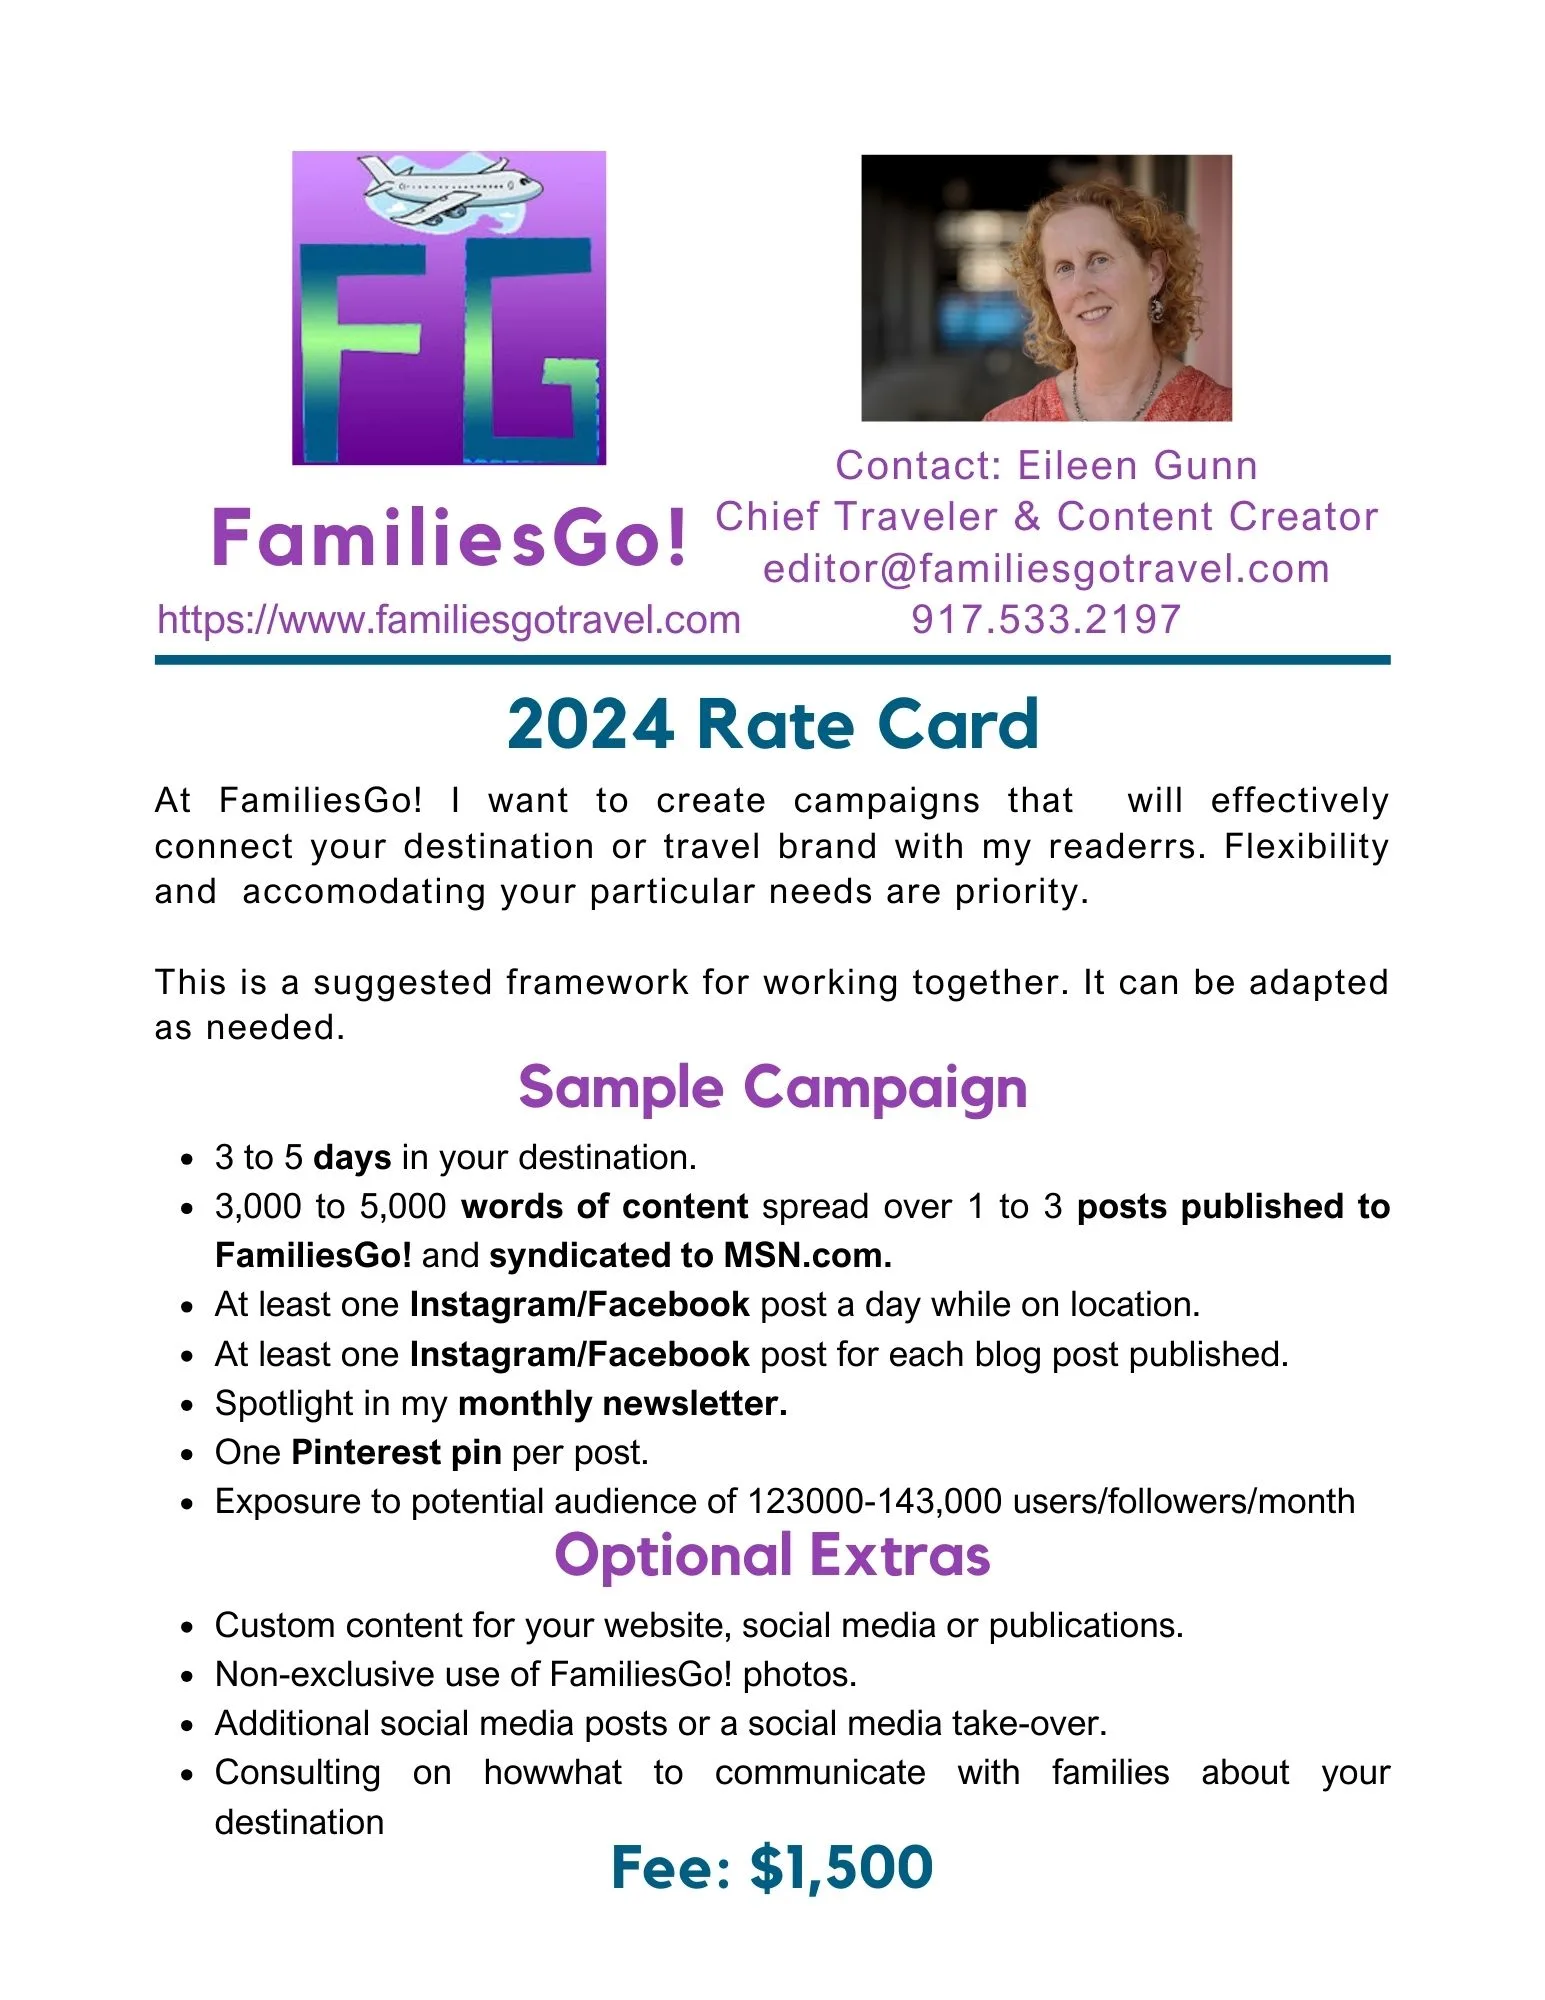 familiesgo rate card 2024